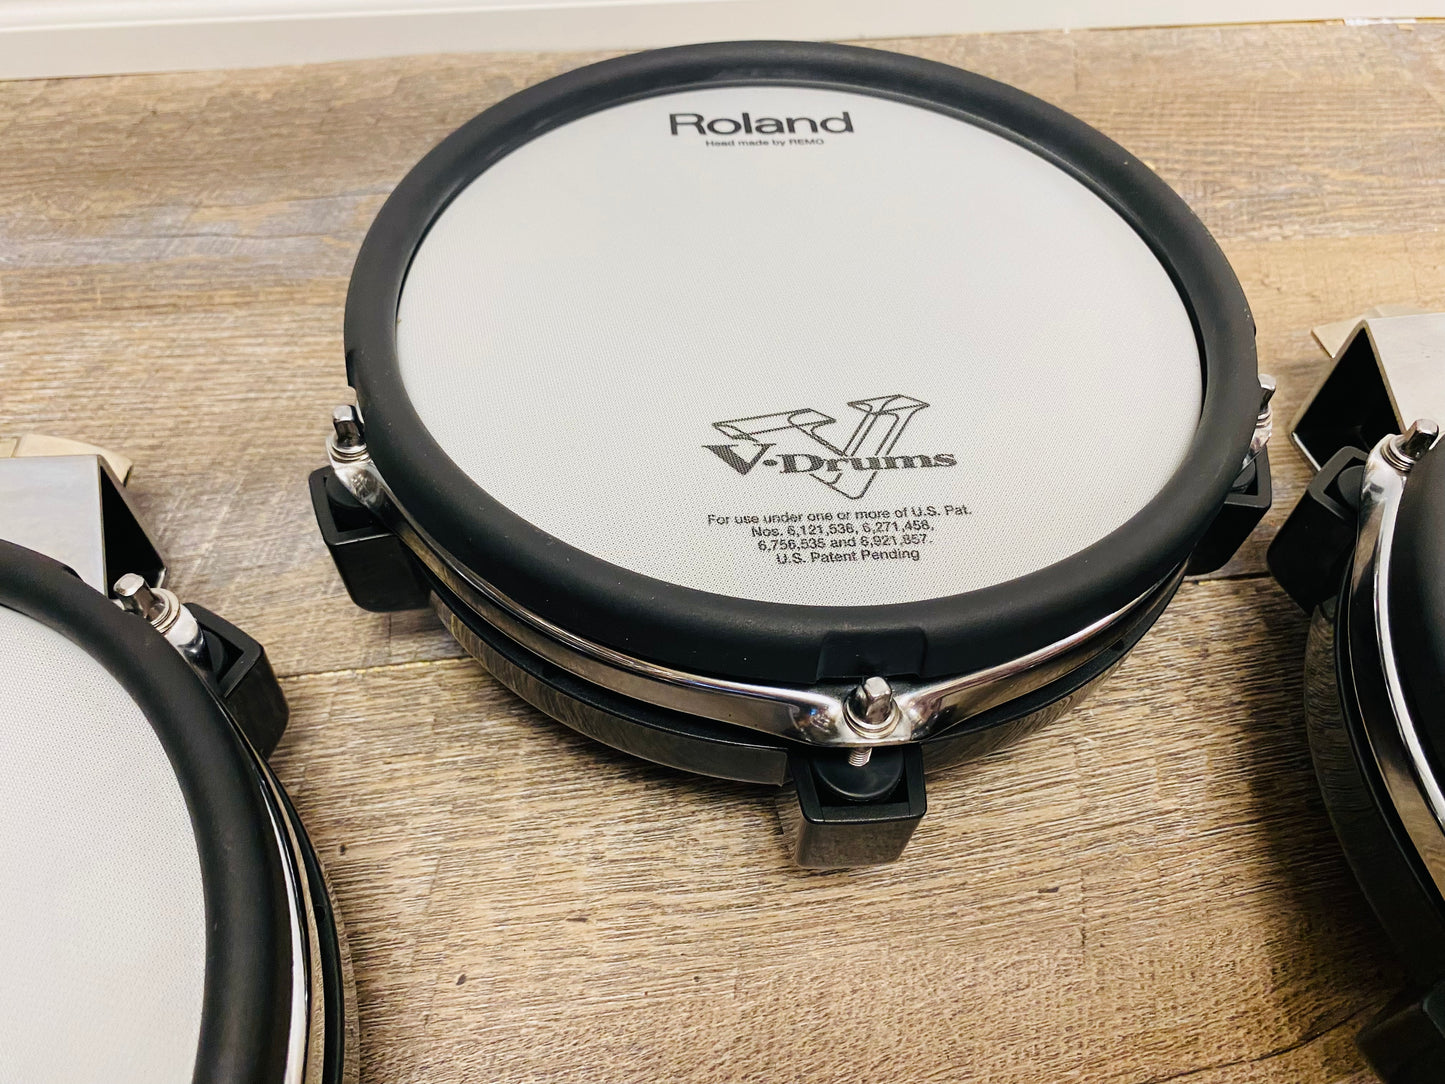 Set of 3 Roland Pd-85 8” mesh drum pads PD85